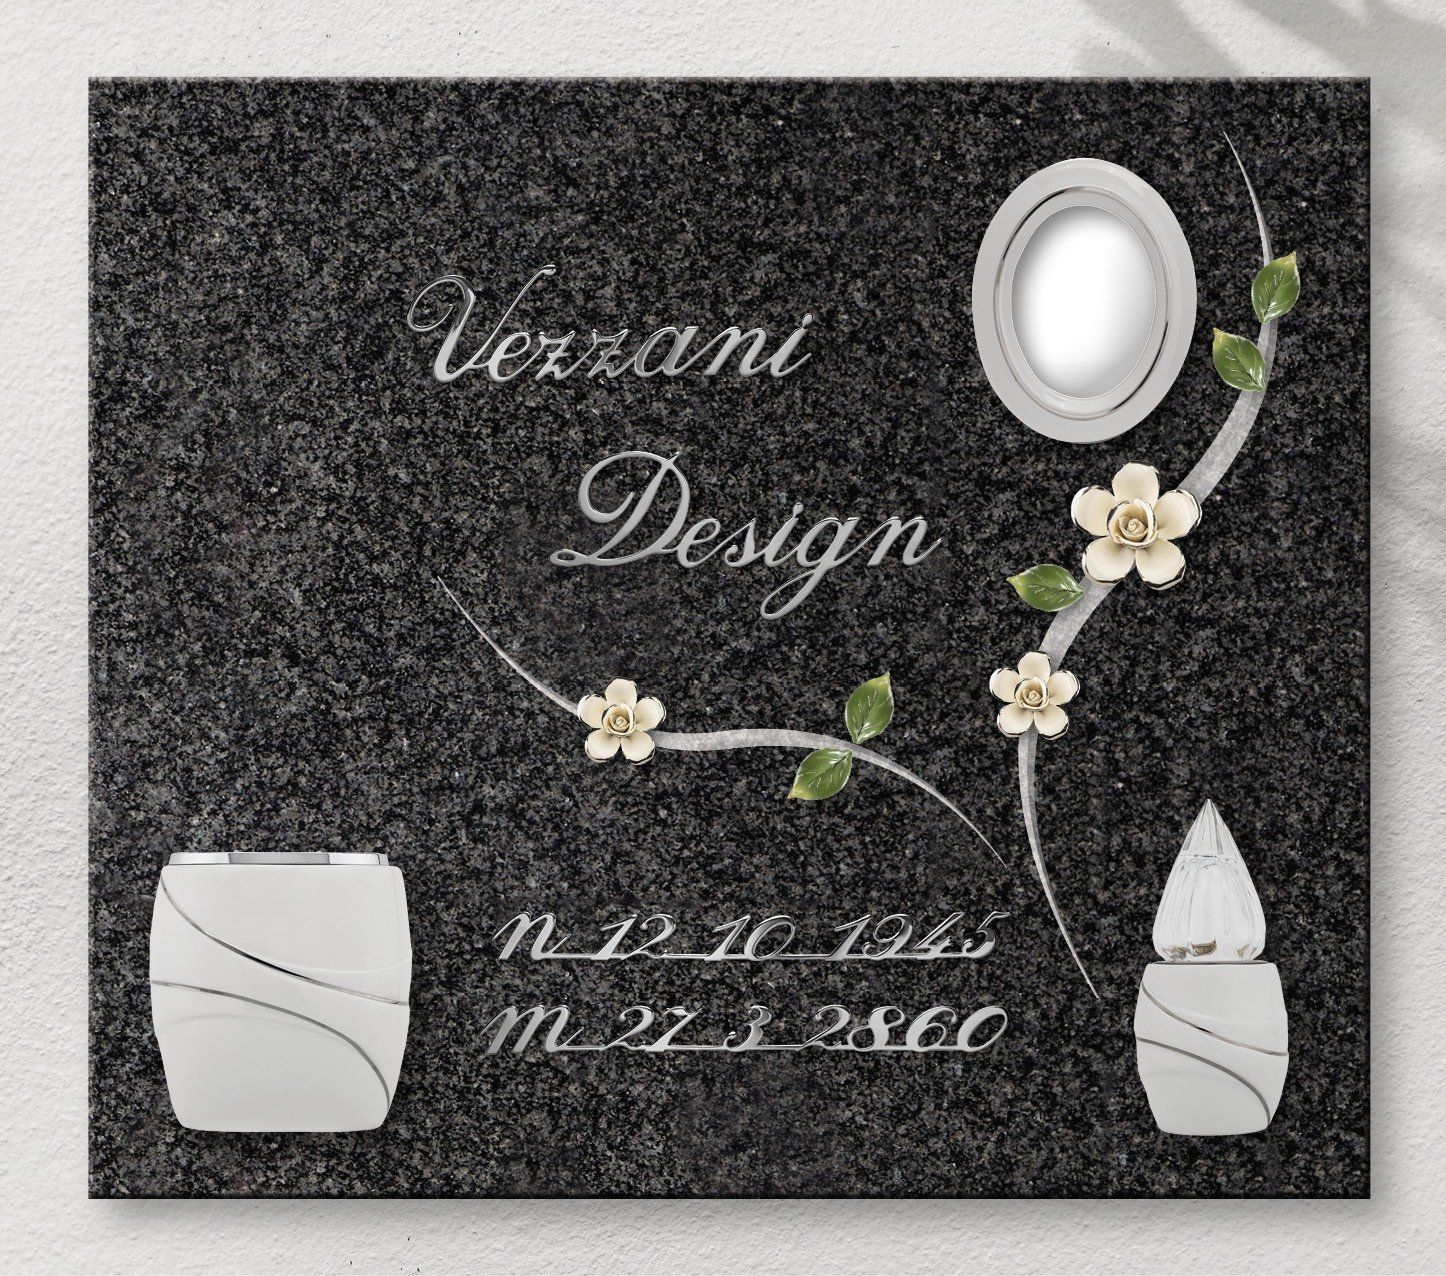 Niche with personalized engraving vezzani design 6